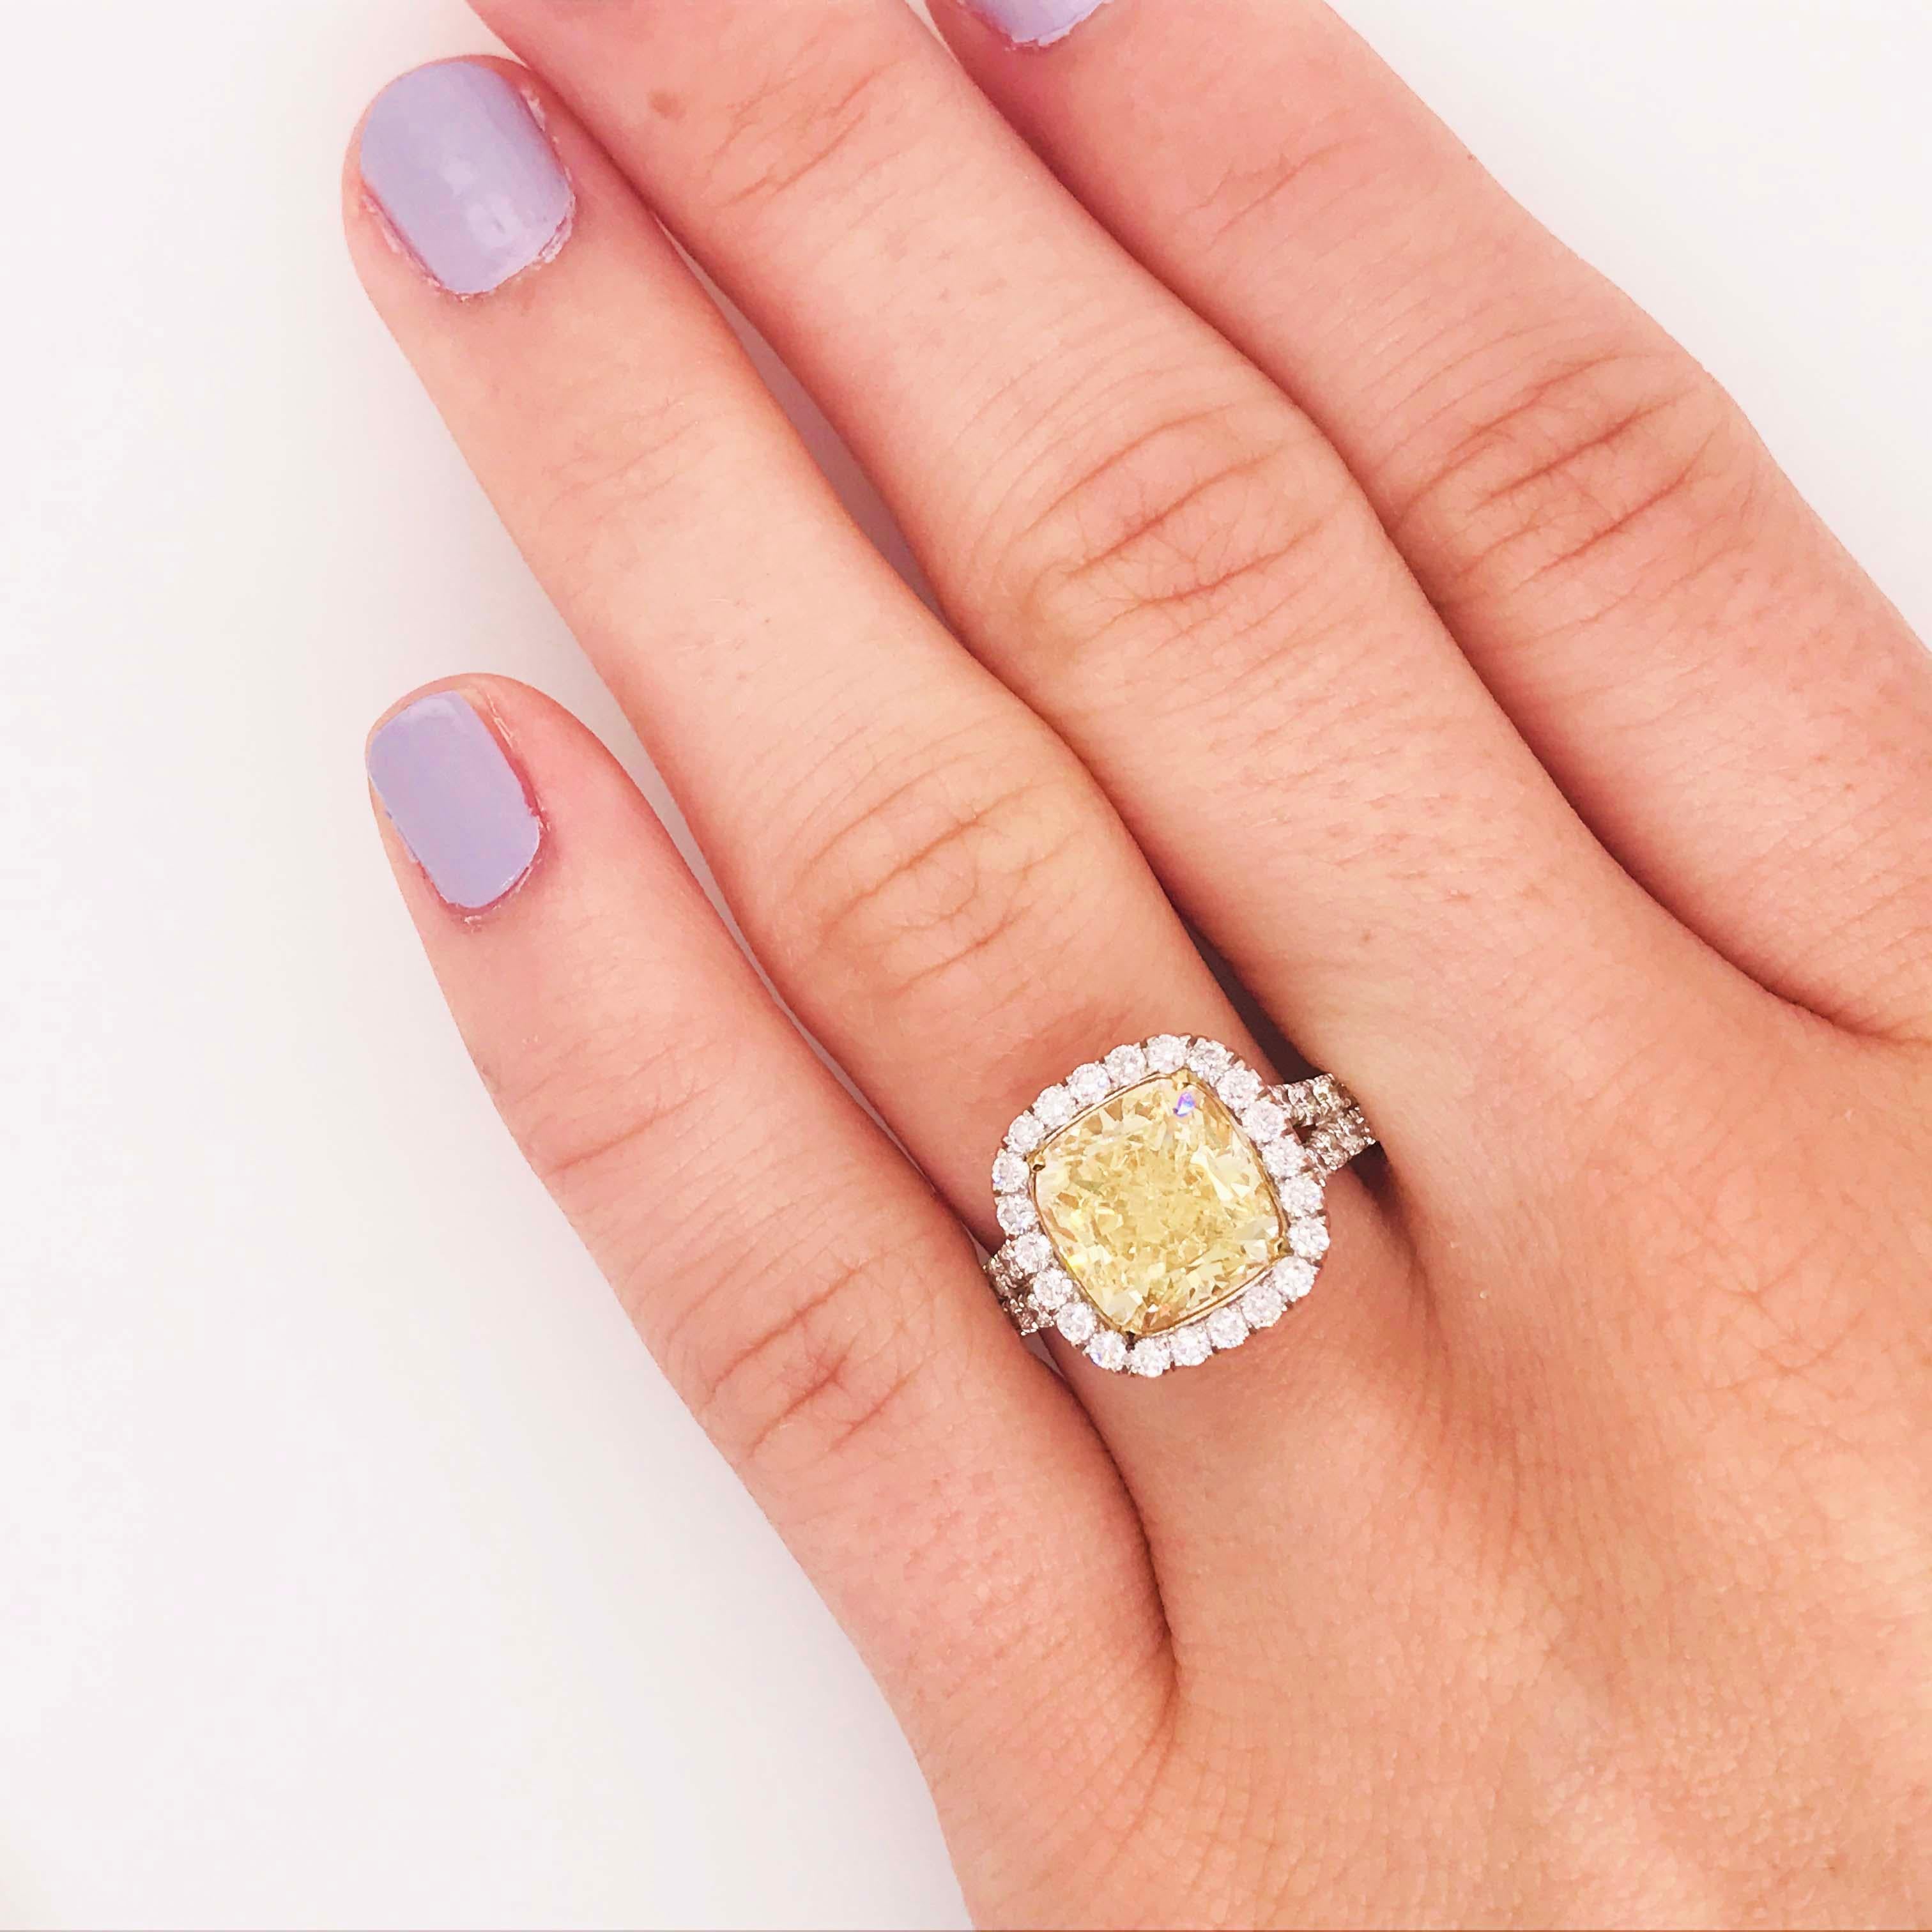 Fancy Yellow Diamond Ring has a gorgeous 4.00-carat yellow diamond set in an incredible 18 karat white gold semi-mount that has the yellow diamond set in 18 karat yellow gold prongs.
This incredible fancy yellow diamond ring is breathtaking! With a